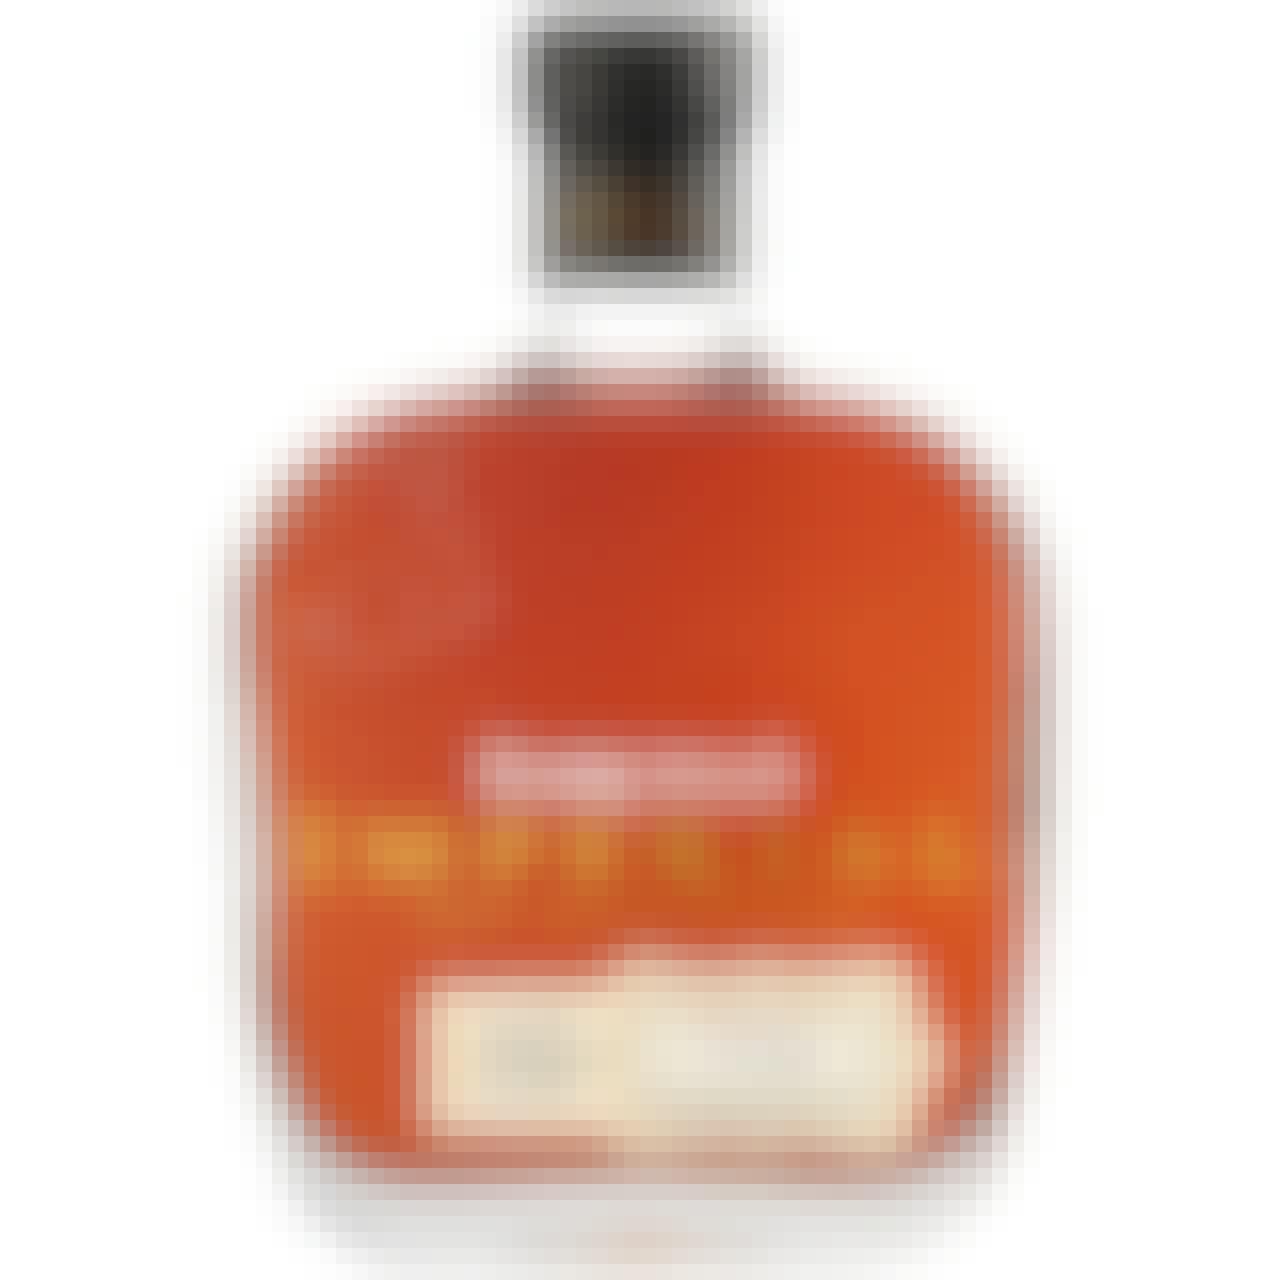 Barcelo Imperial Rum 750ml